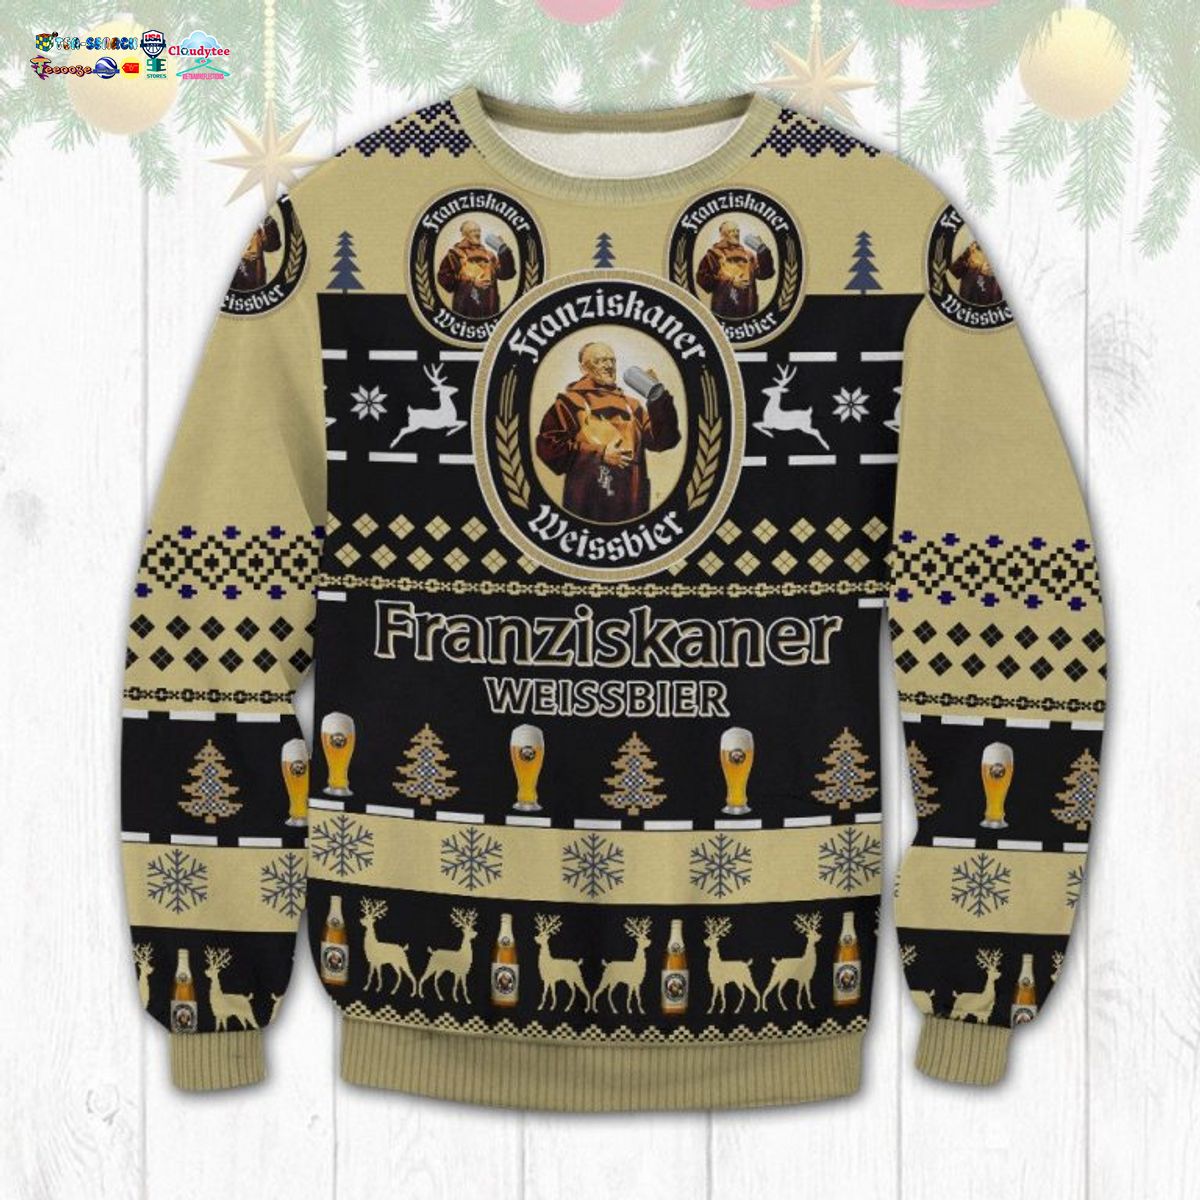 Franziskaner Weissbier Ugly Christmas Sweater